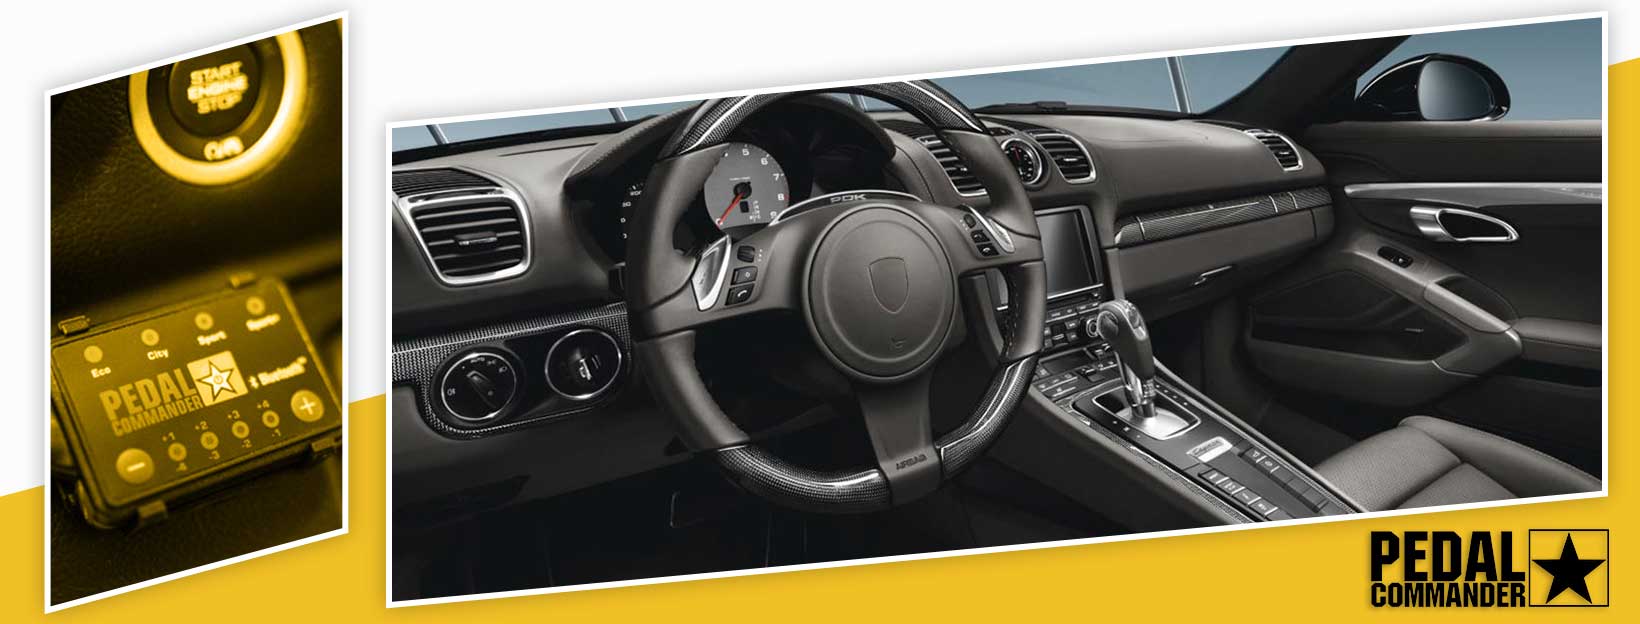 Pedal Commander for Porsche Boxster - interior